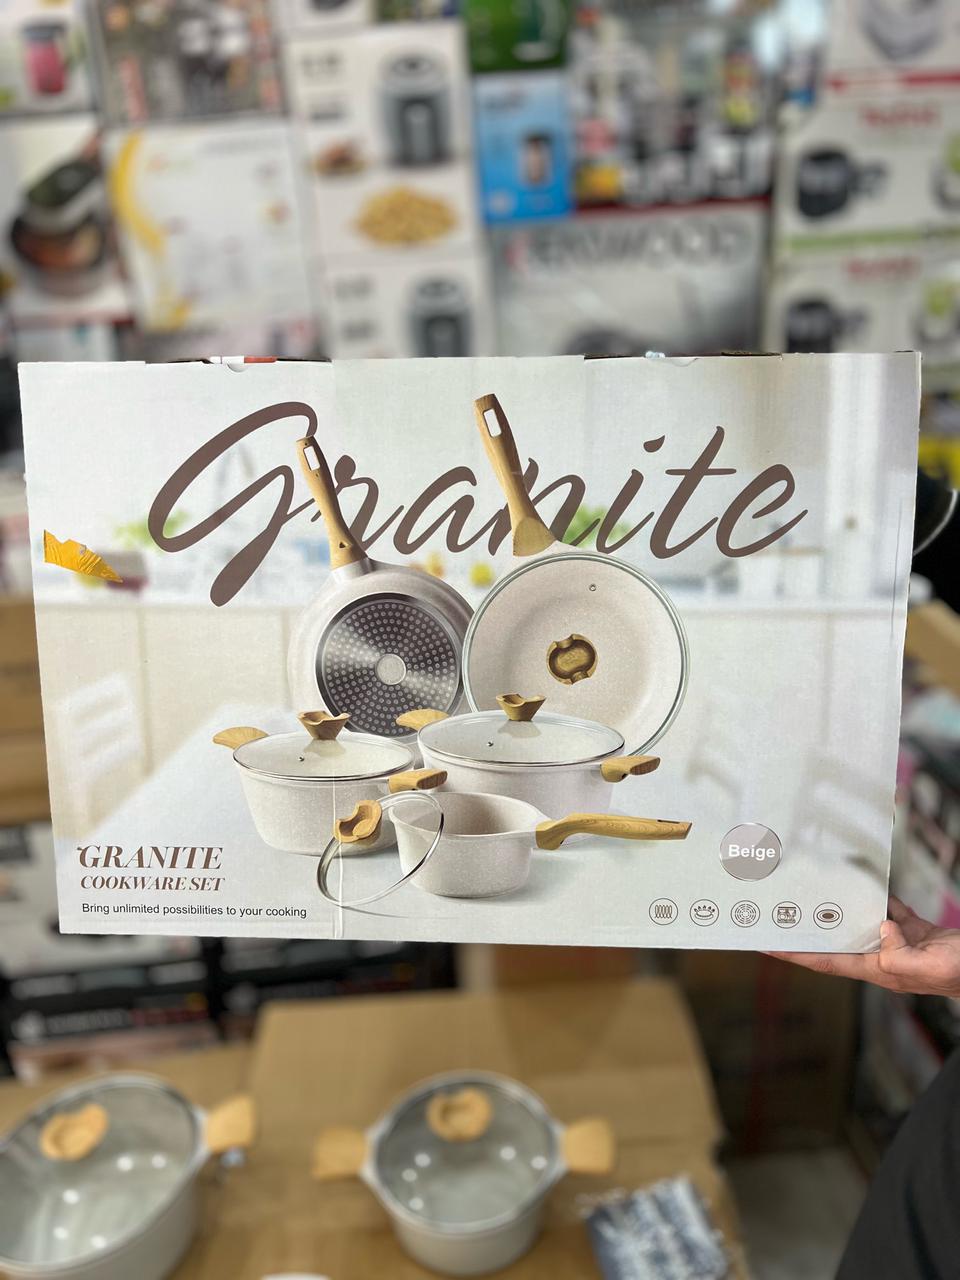 Germany Granite Cookwear set